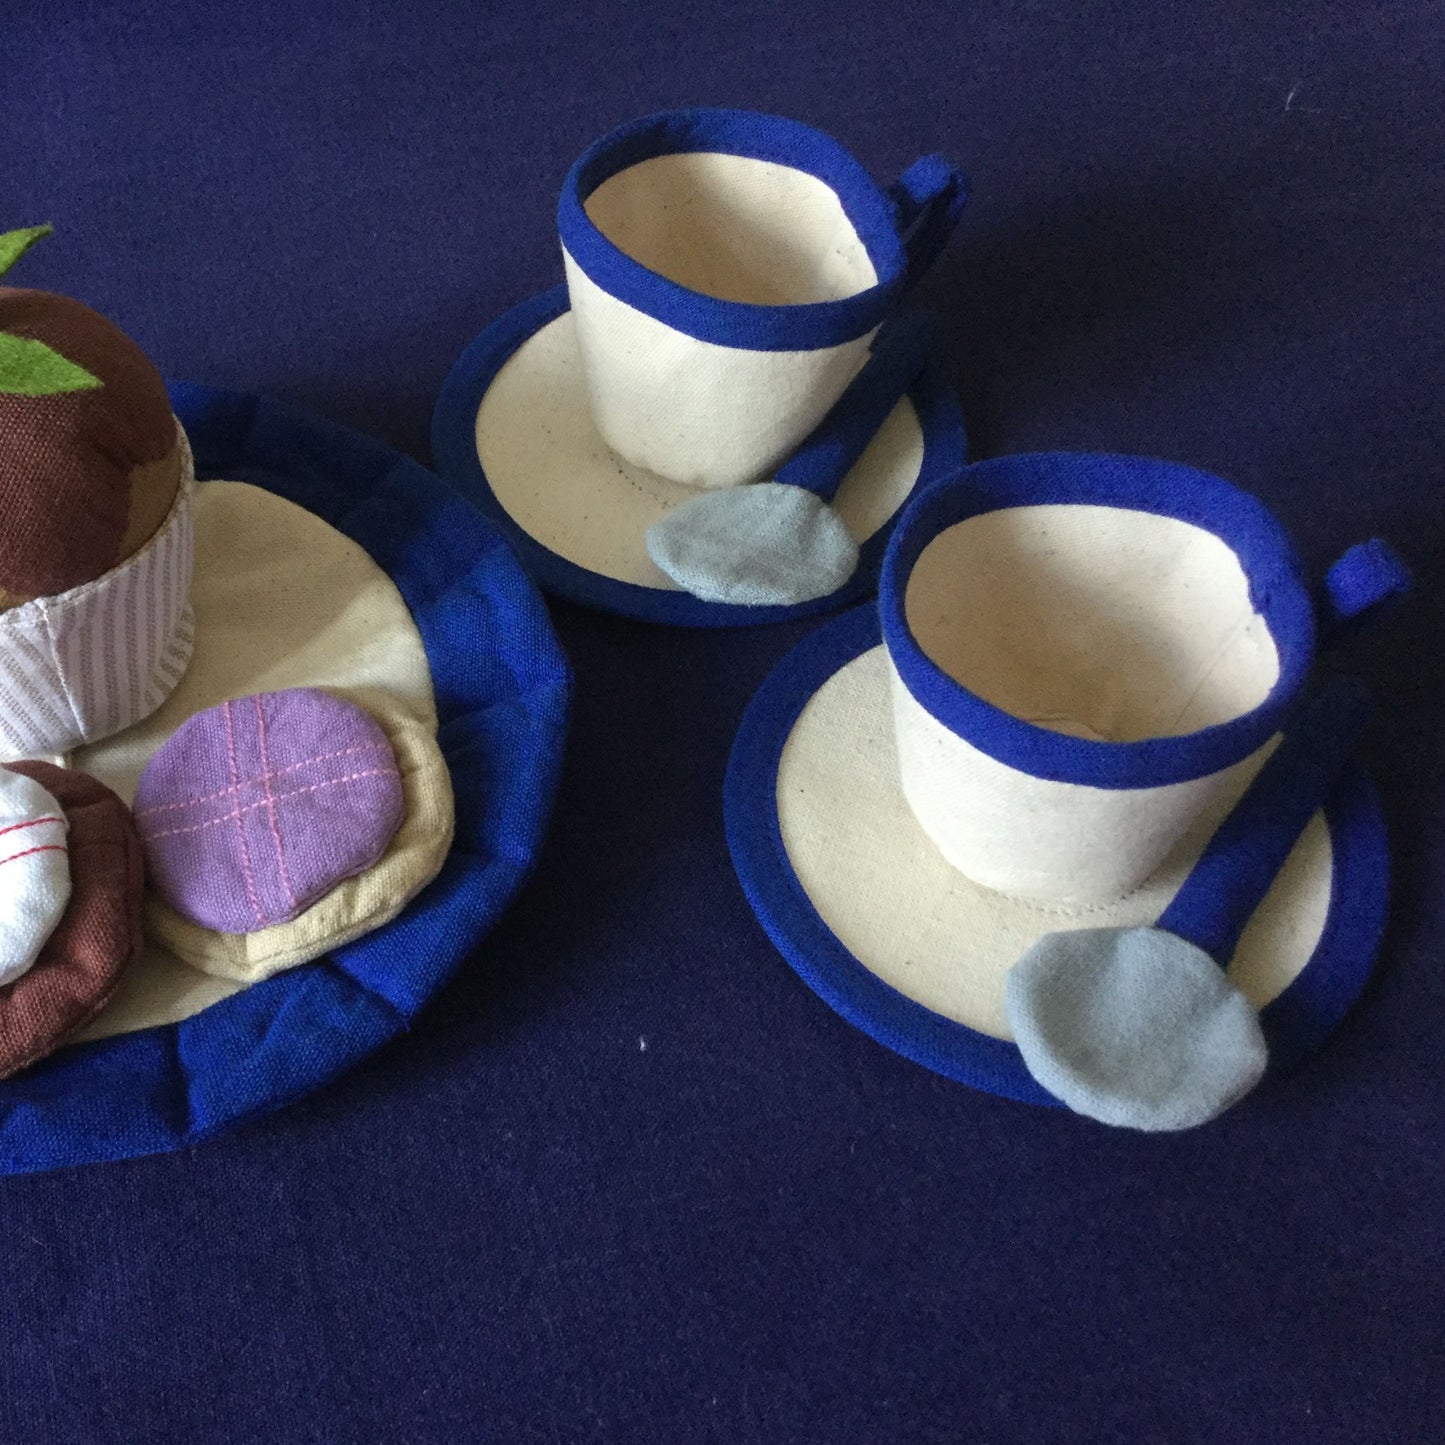 Fair Trade toys - tea party toy tea set from Weaving Hope